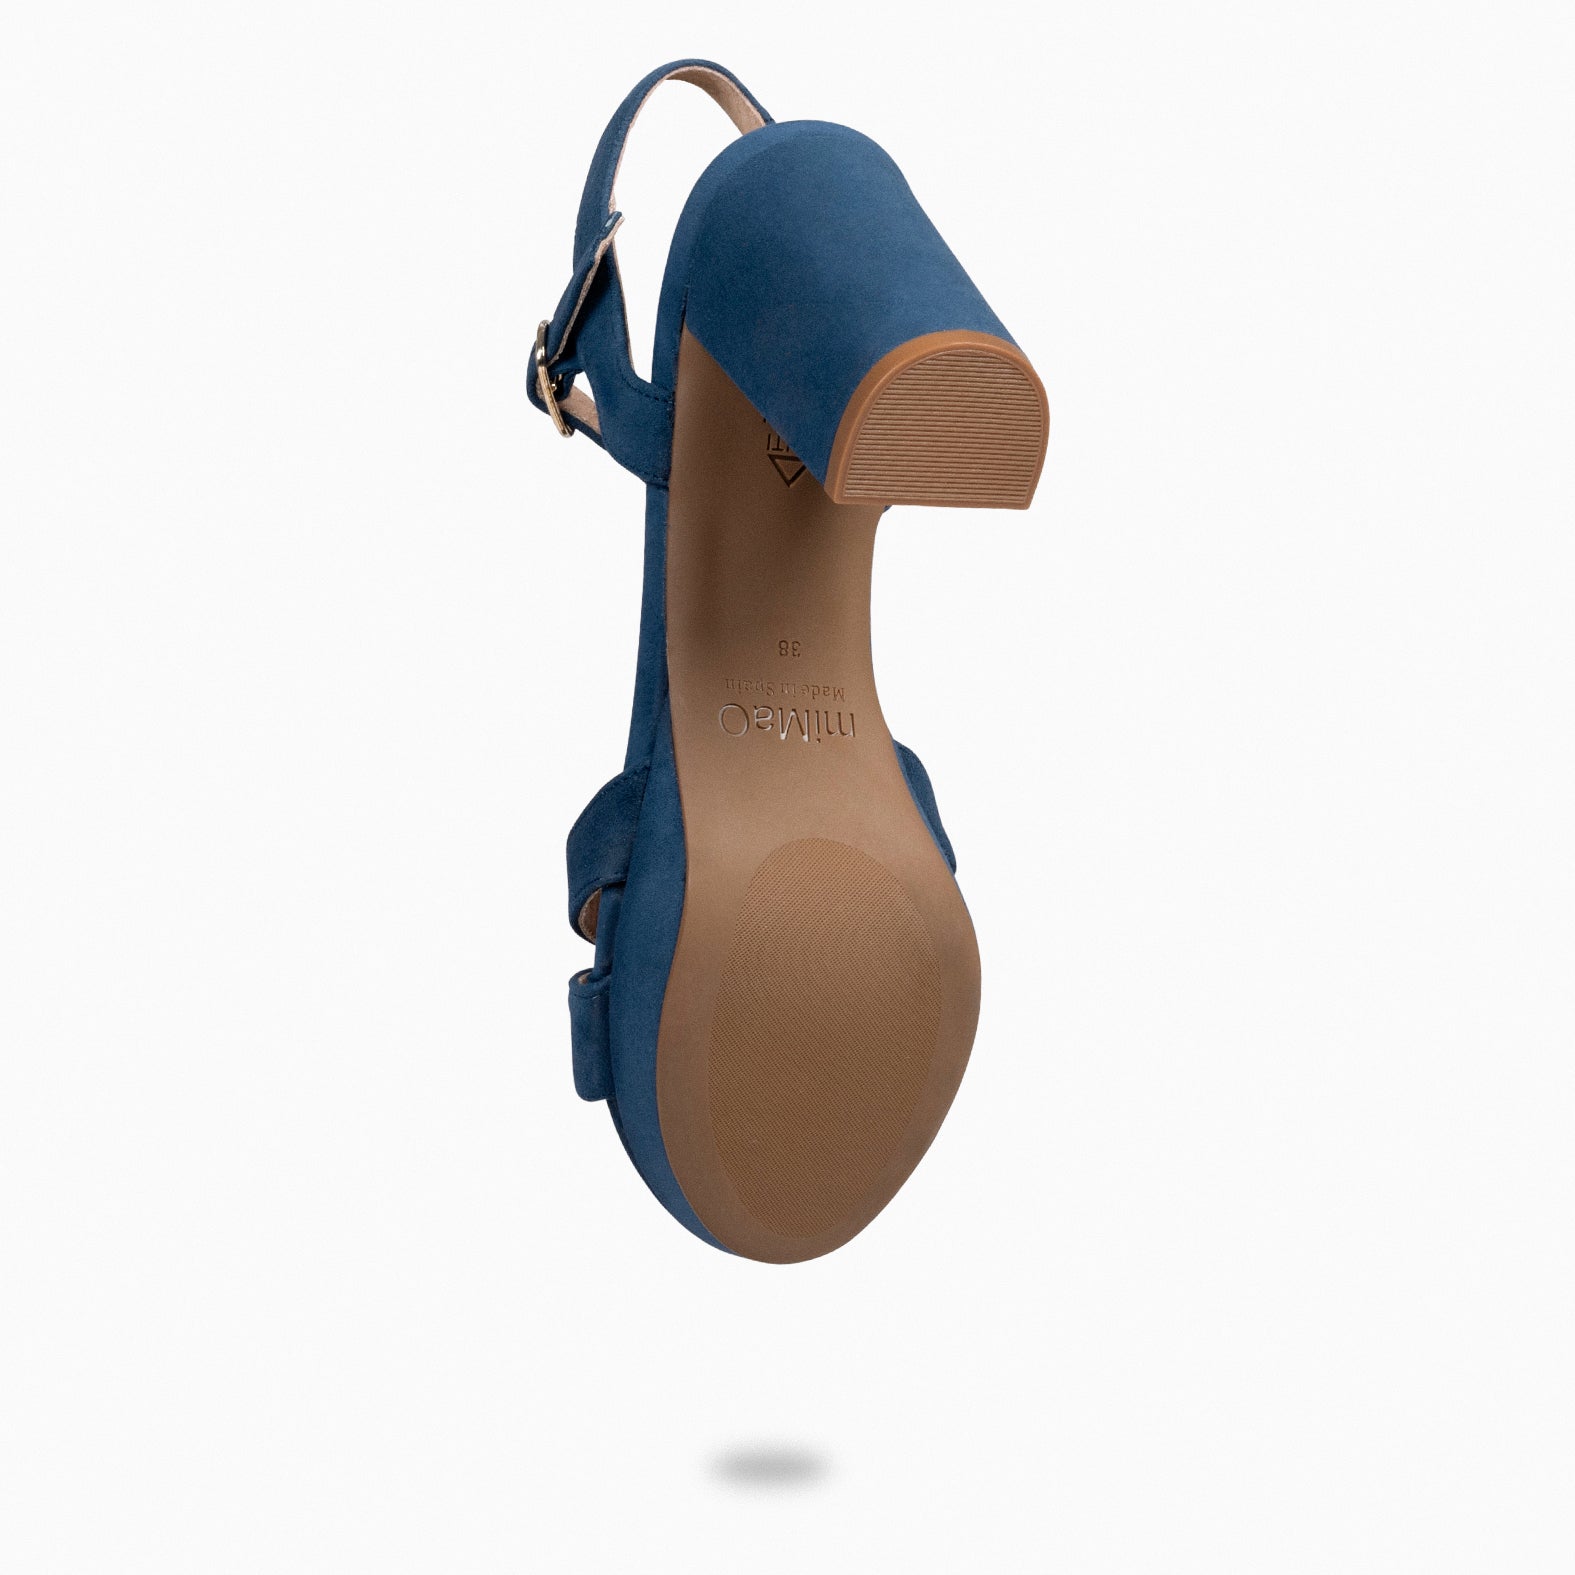 PARIS – NAVY high heel sandal with platform